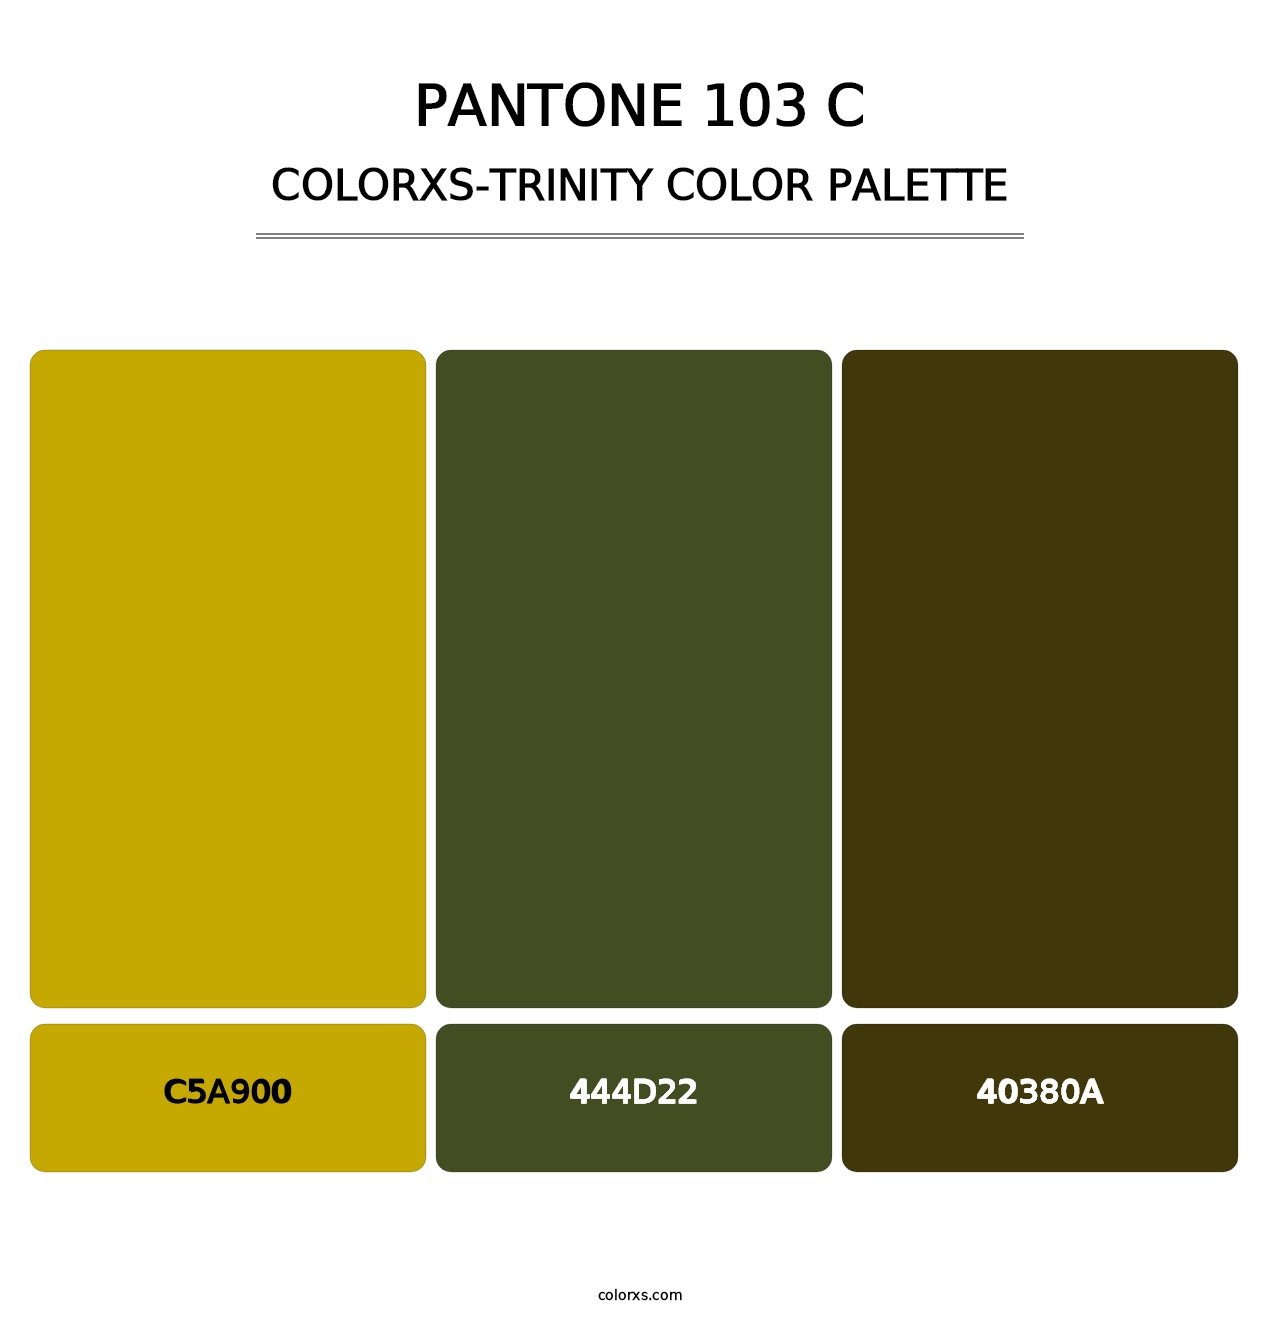 PANTONE 103 C - Colorxs Trinity Palette